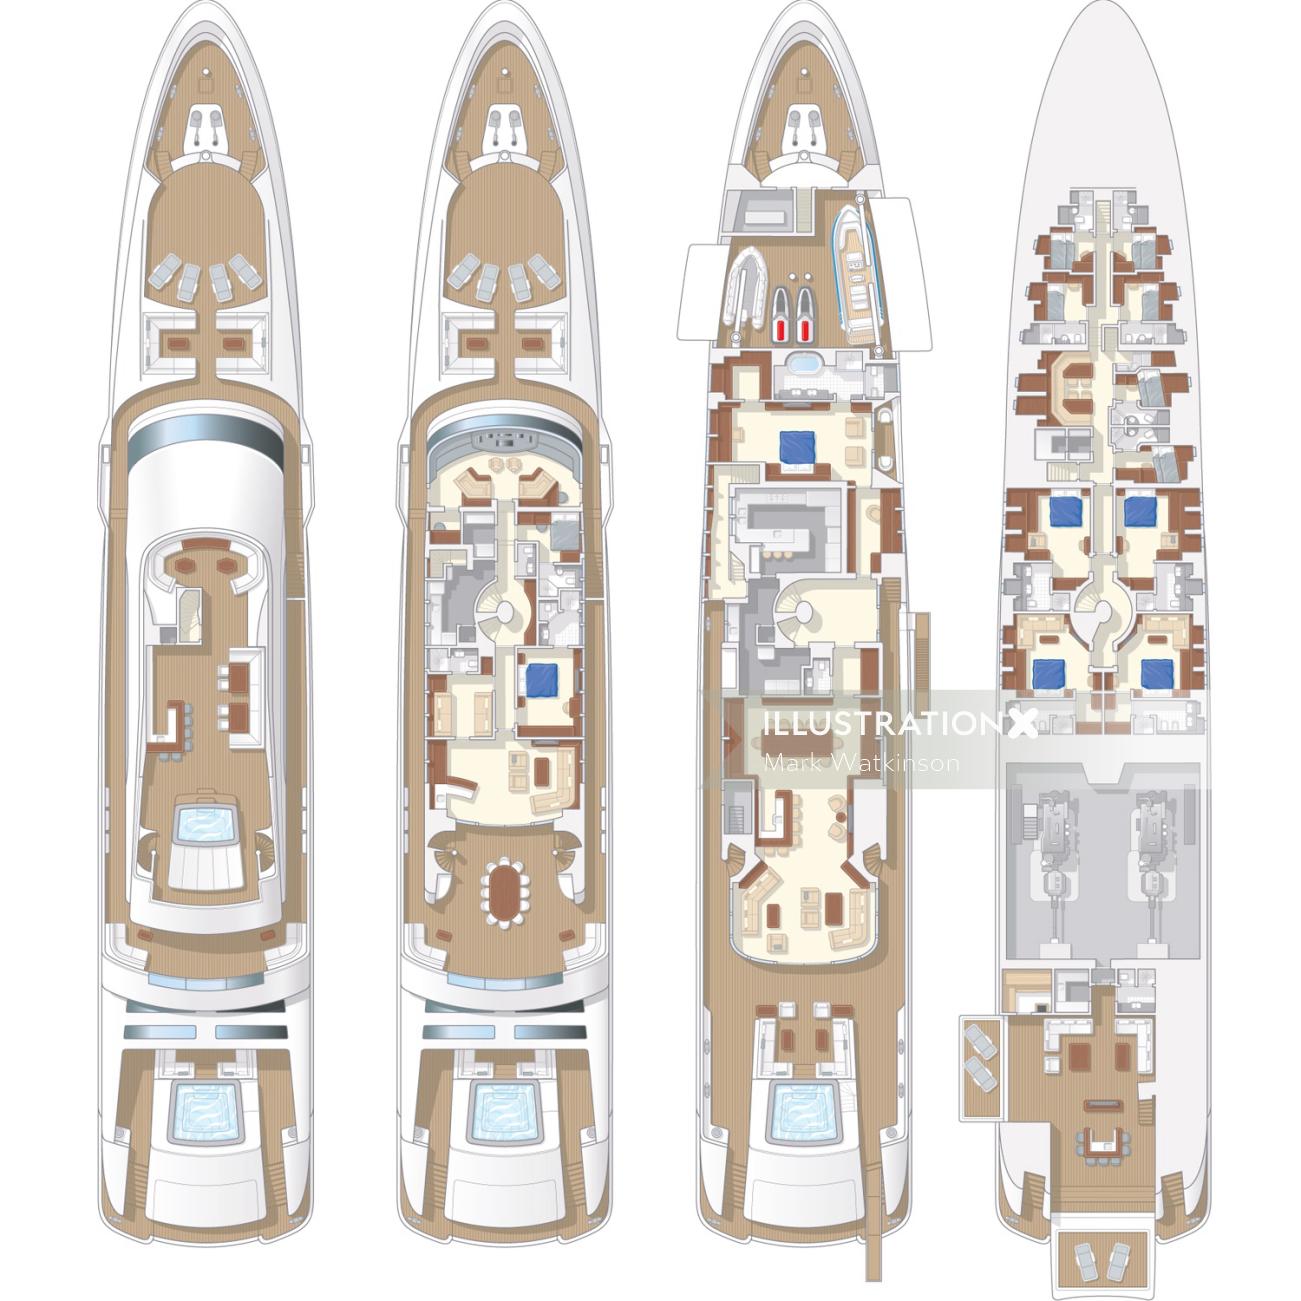 Plan de arquitectura del piso del barco yate barco